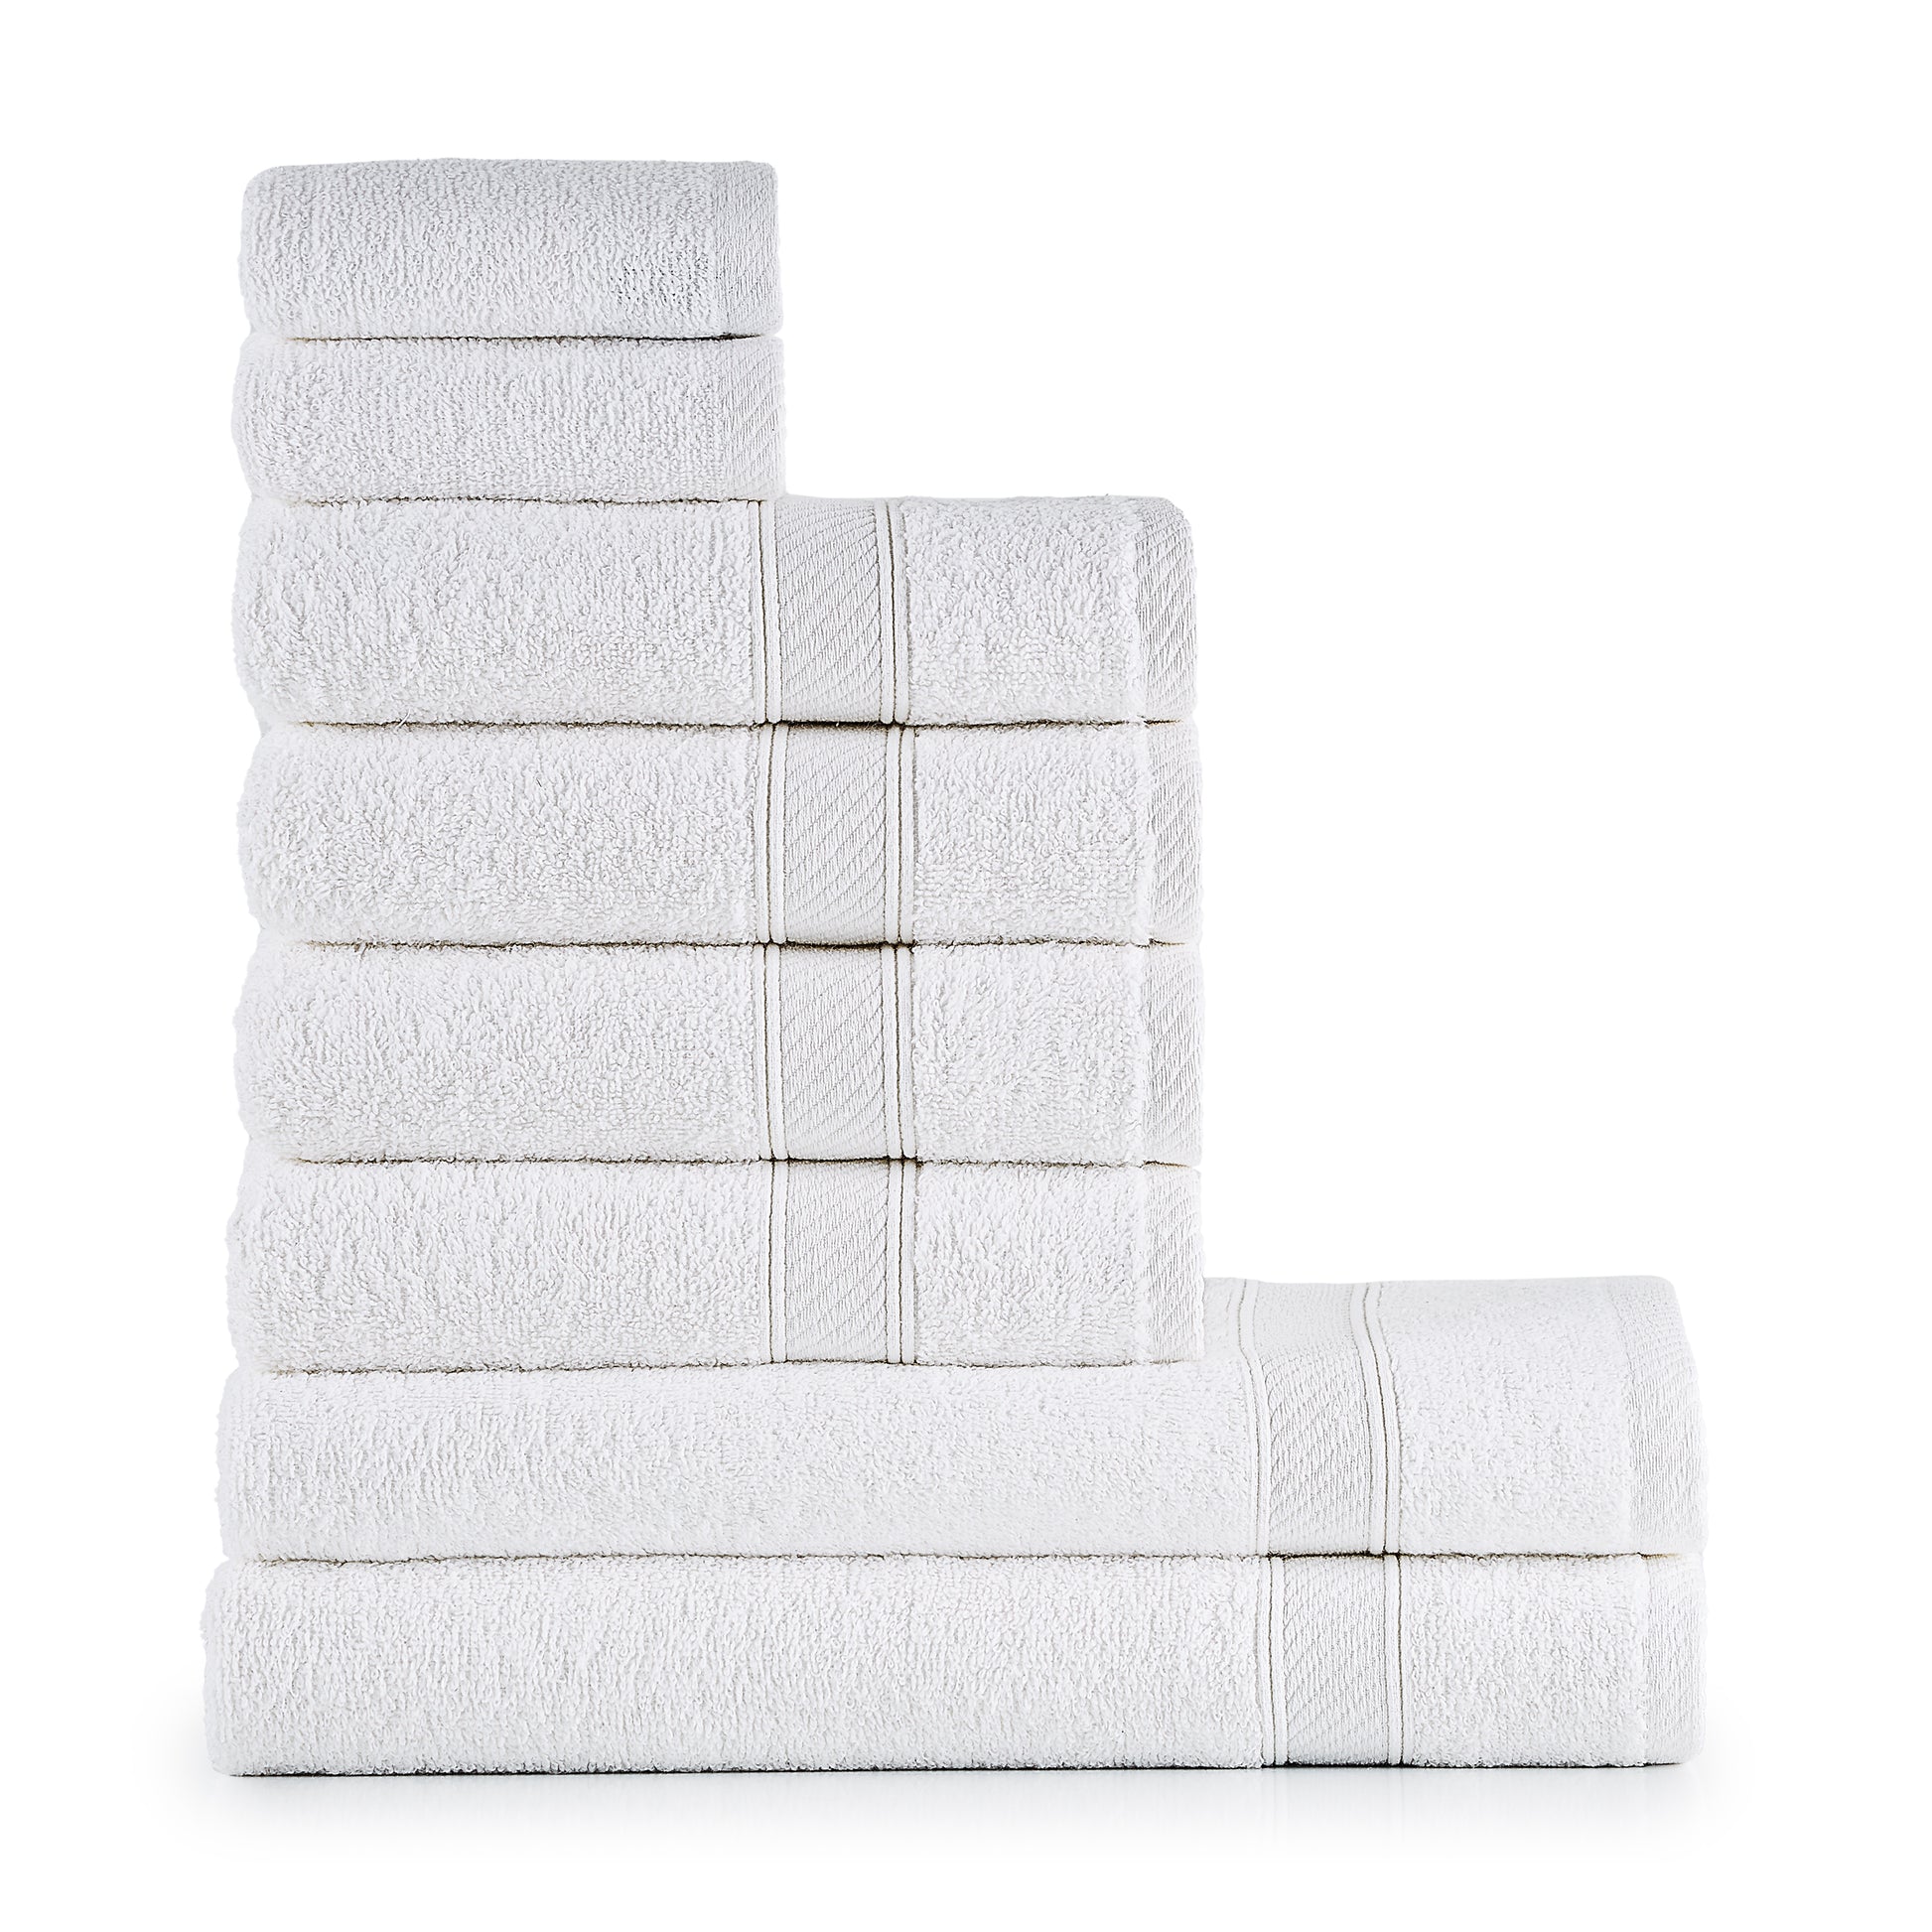 Handtücher Set Weiß 8-TLG: Luxus Duschhandtücher aus 100% Baumwolle